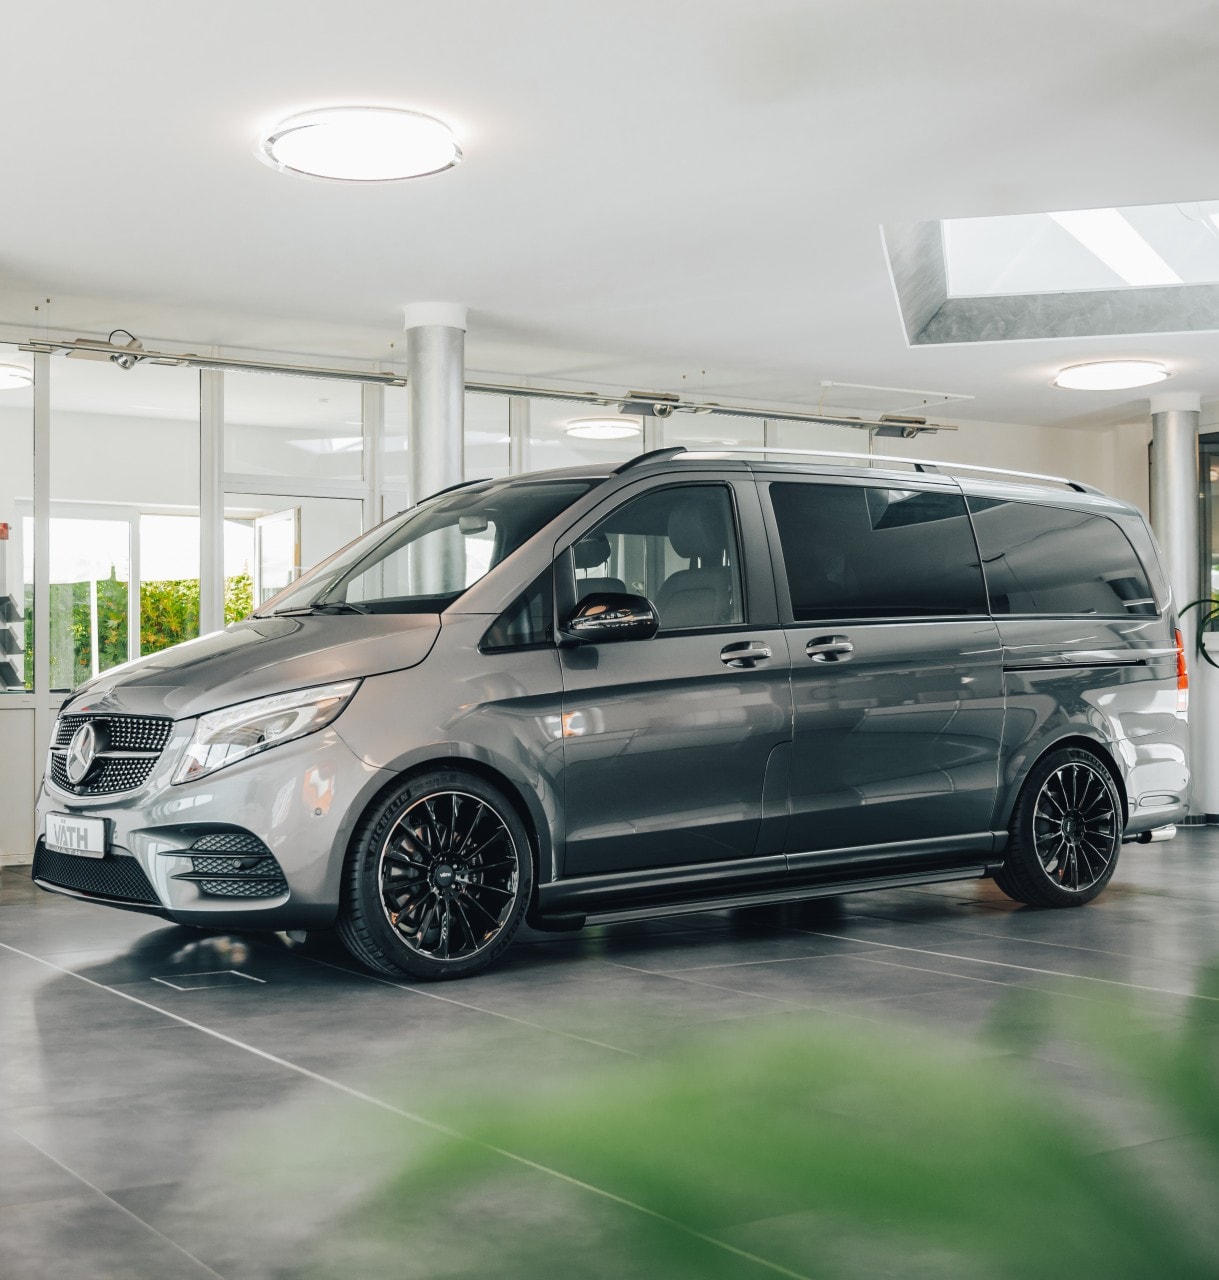 Mercedes-Benz Vito Premium Night Edition launched